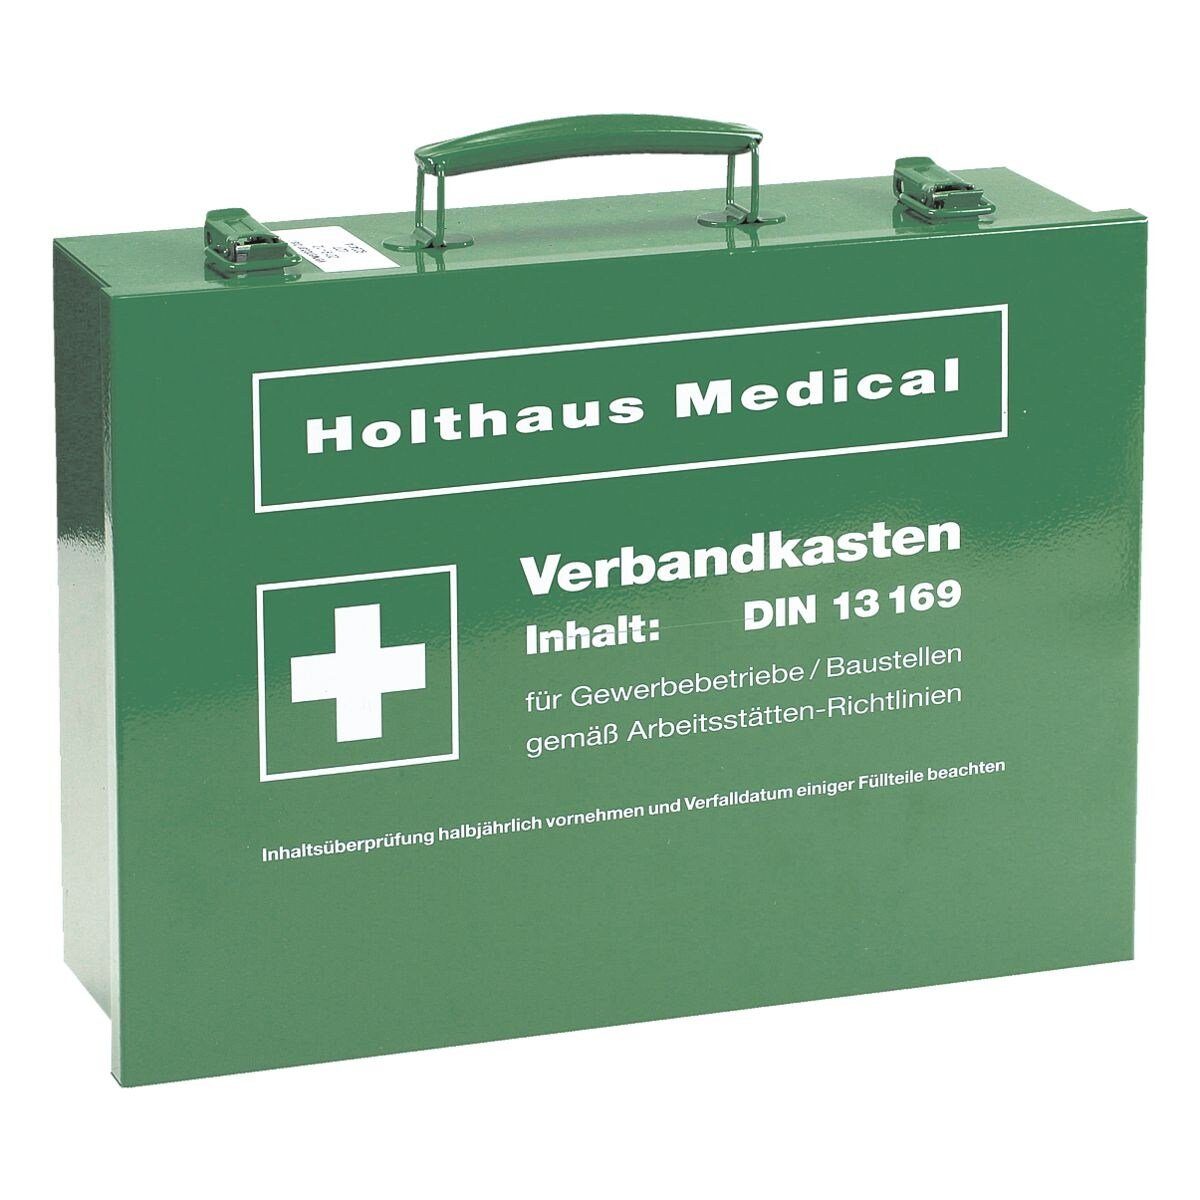 inkl. Holthaus Stahlblech, Medical nach Erste-Hilfe-Koffer Füllsortiment DIN 13169